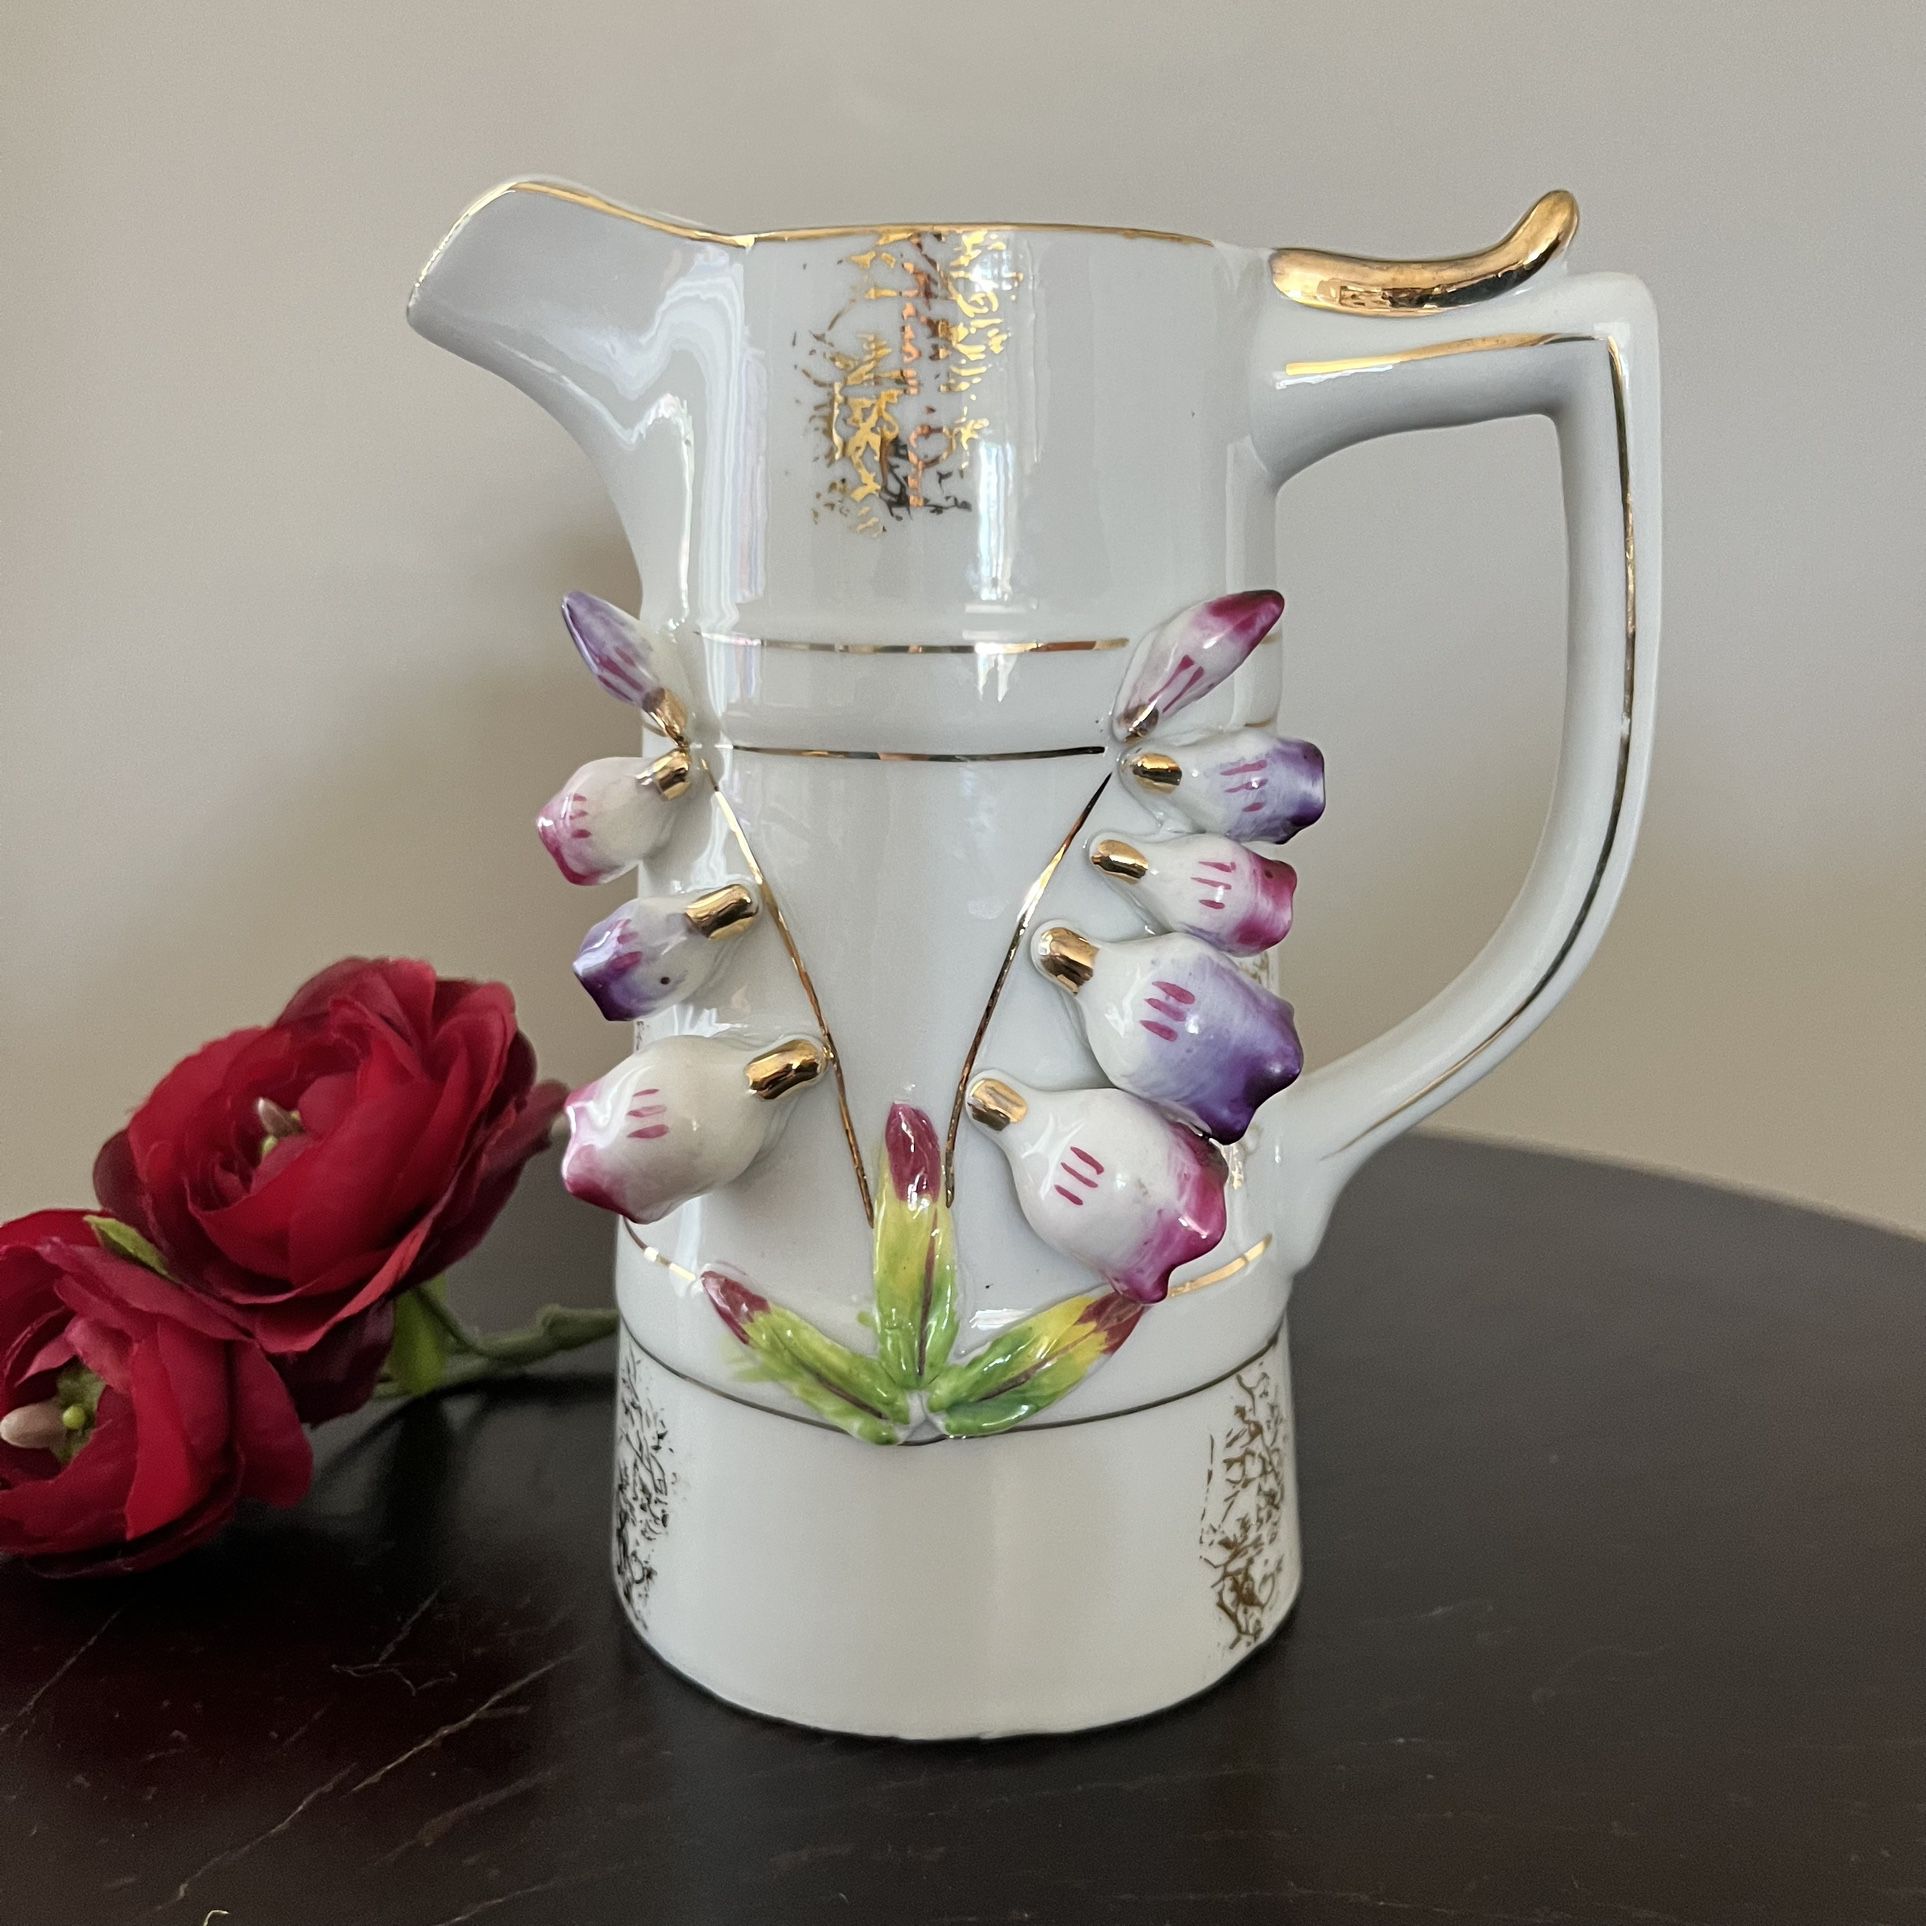  White Porcelain Pitcher Jug Vase  Flowers  Gilt Accent Shelve Or Table Decorative Piece Hollywood Regency  Country Cottage 